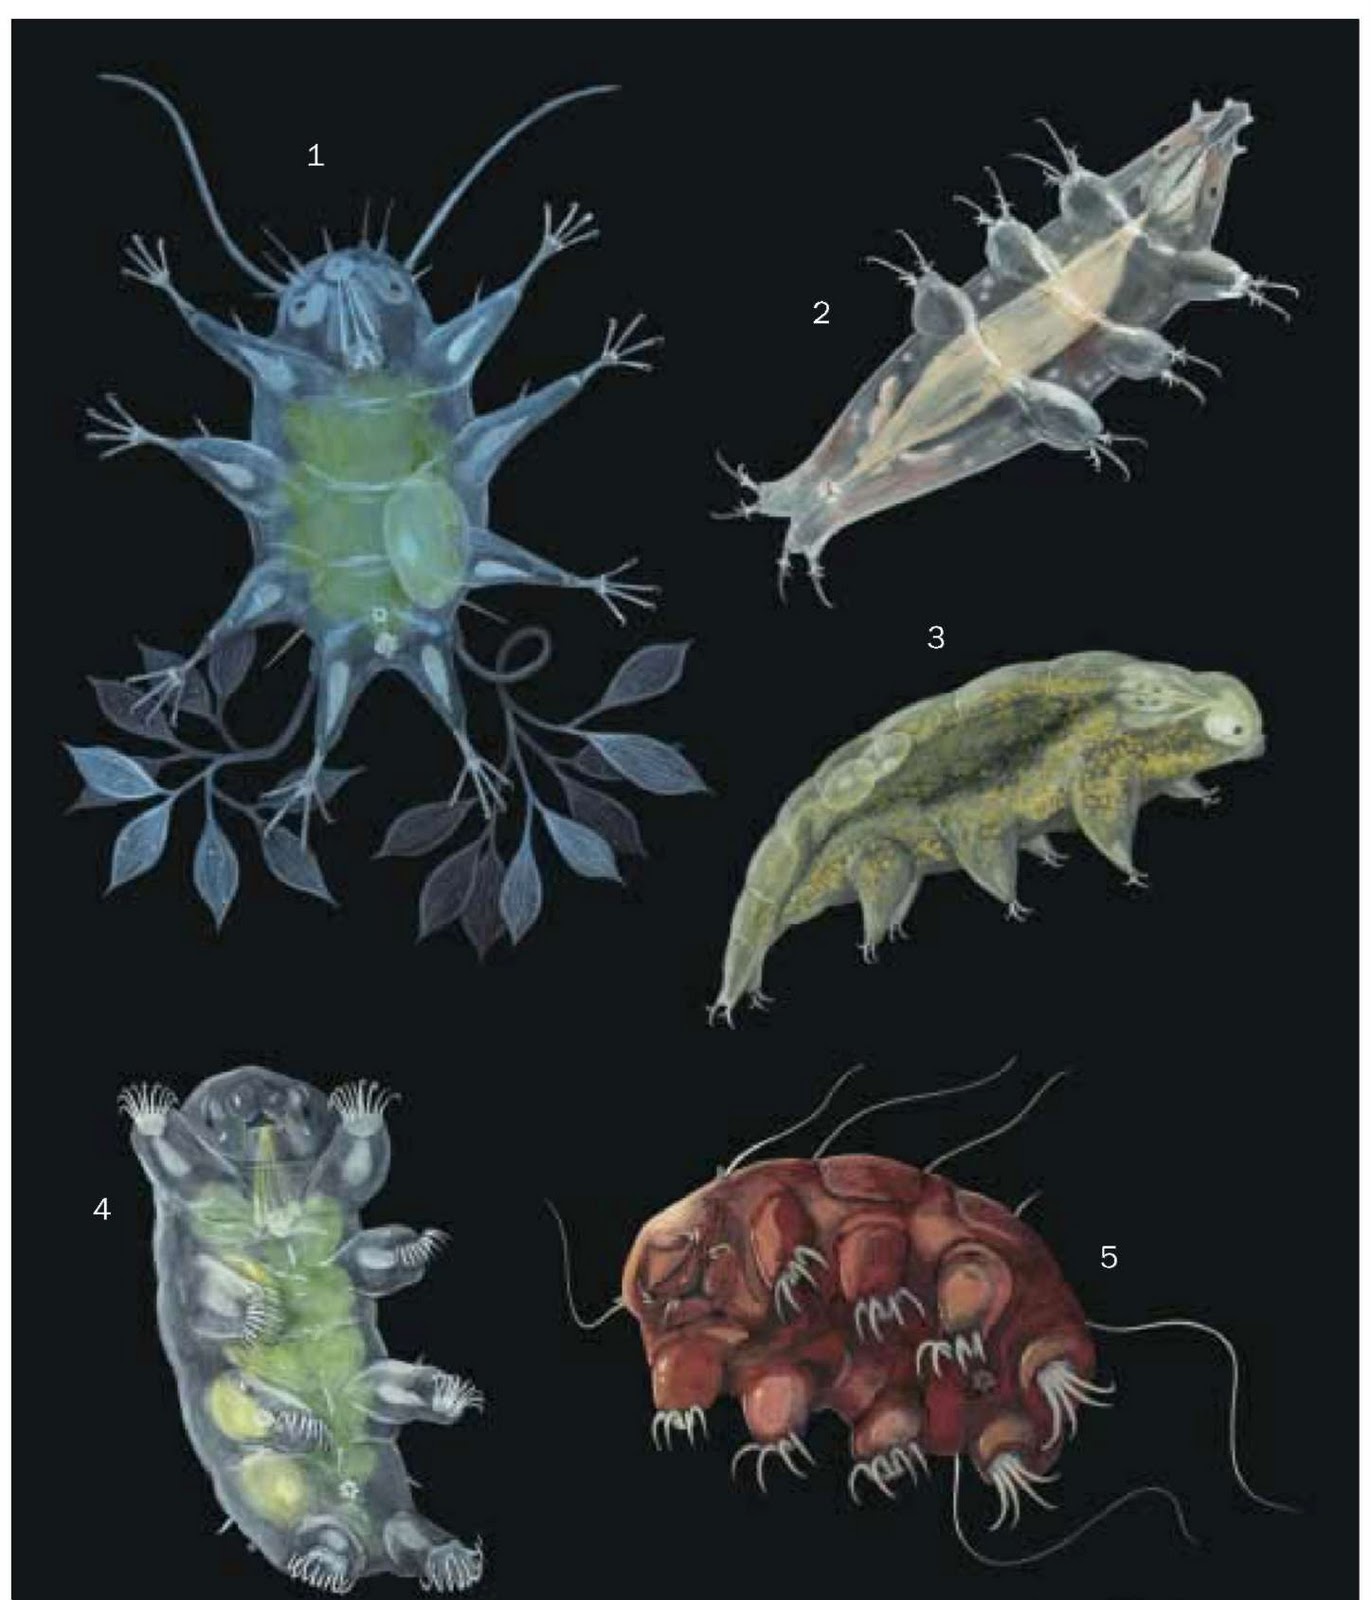 1. Richtersius coronifer; 2. Milnesium tardigradum; 3. Echiniscoides sigismundi ; 4. Echiniscus testudo; 5. Tanarctus bubulubus